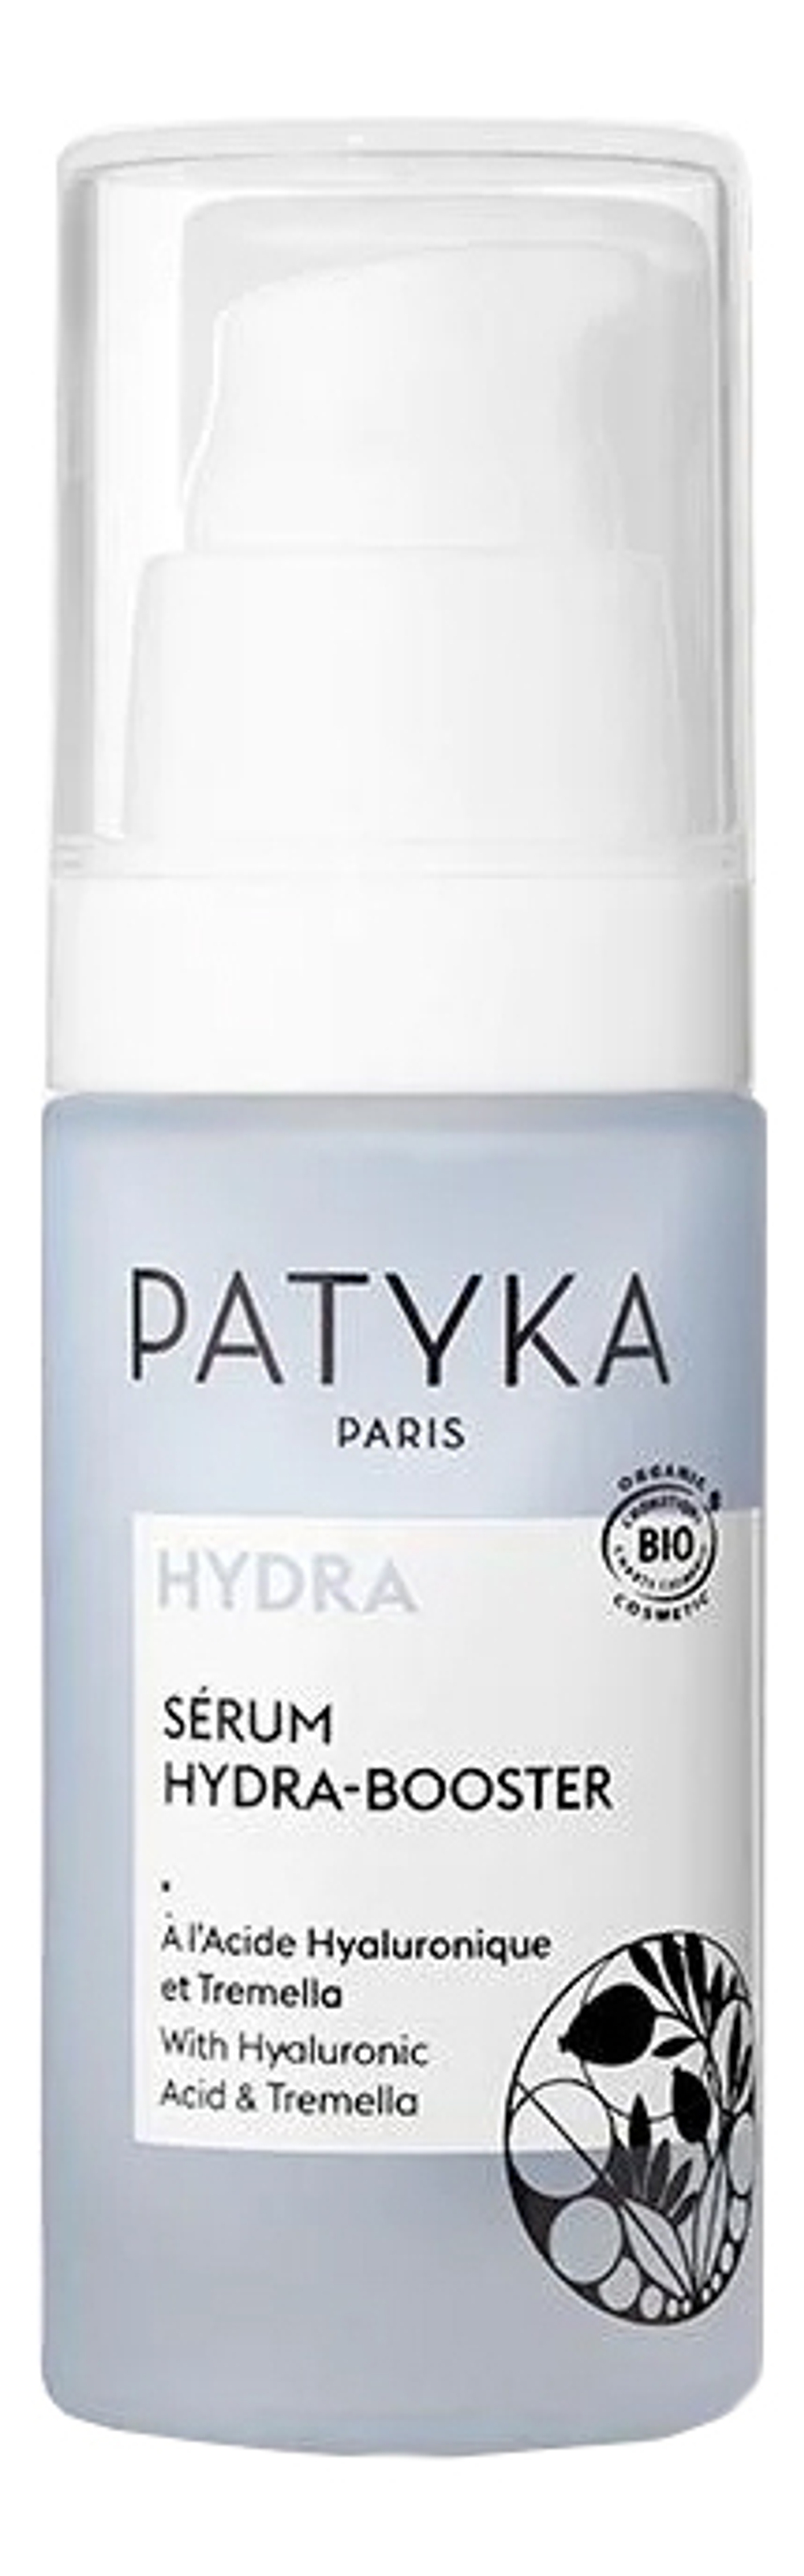 Патика Гидра сыворотка увлажняющая для лица Patyka Hydra hydra-booster serum 30 мл